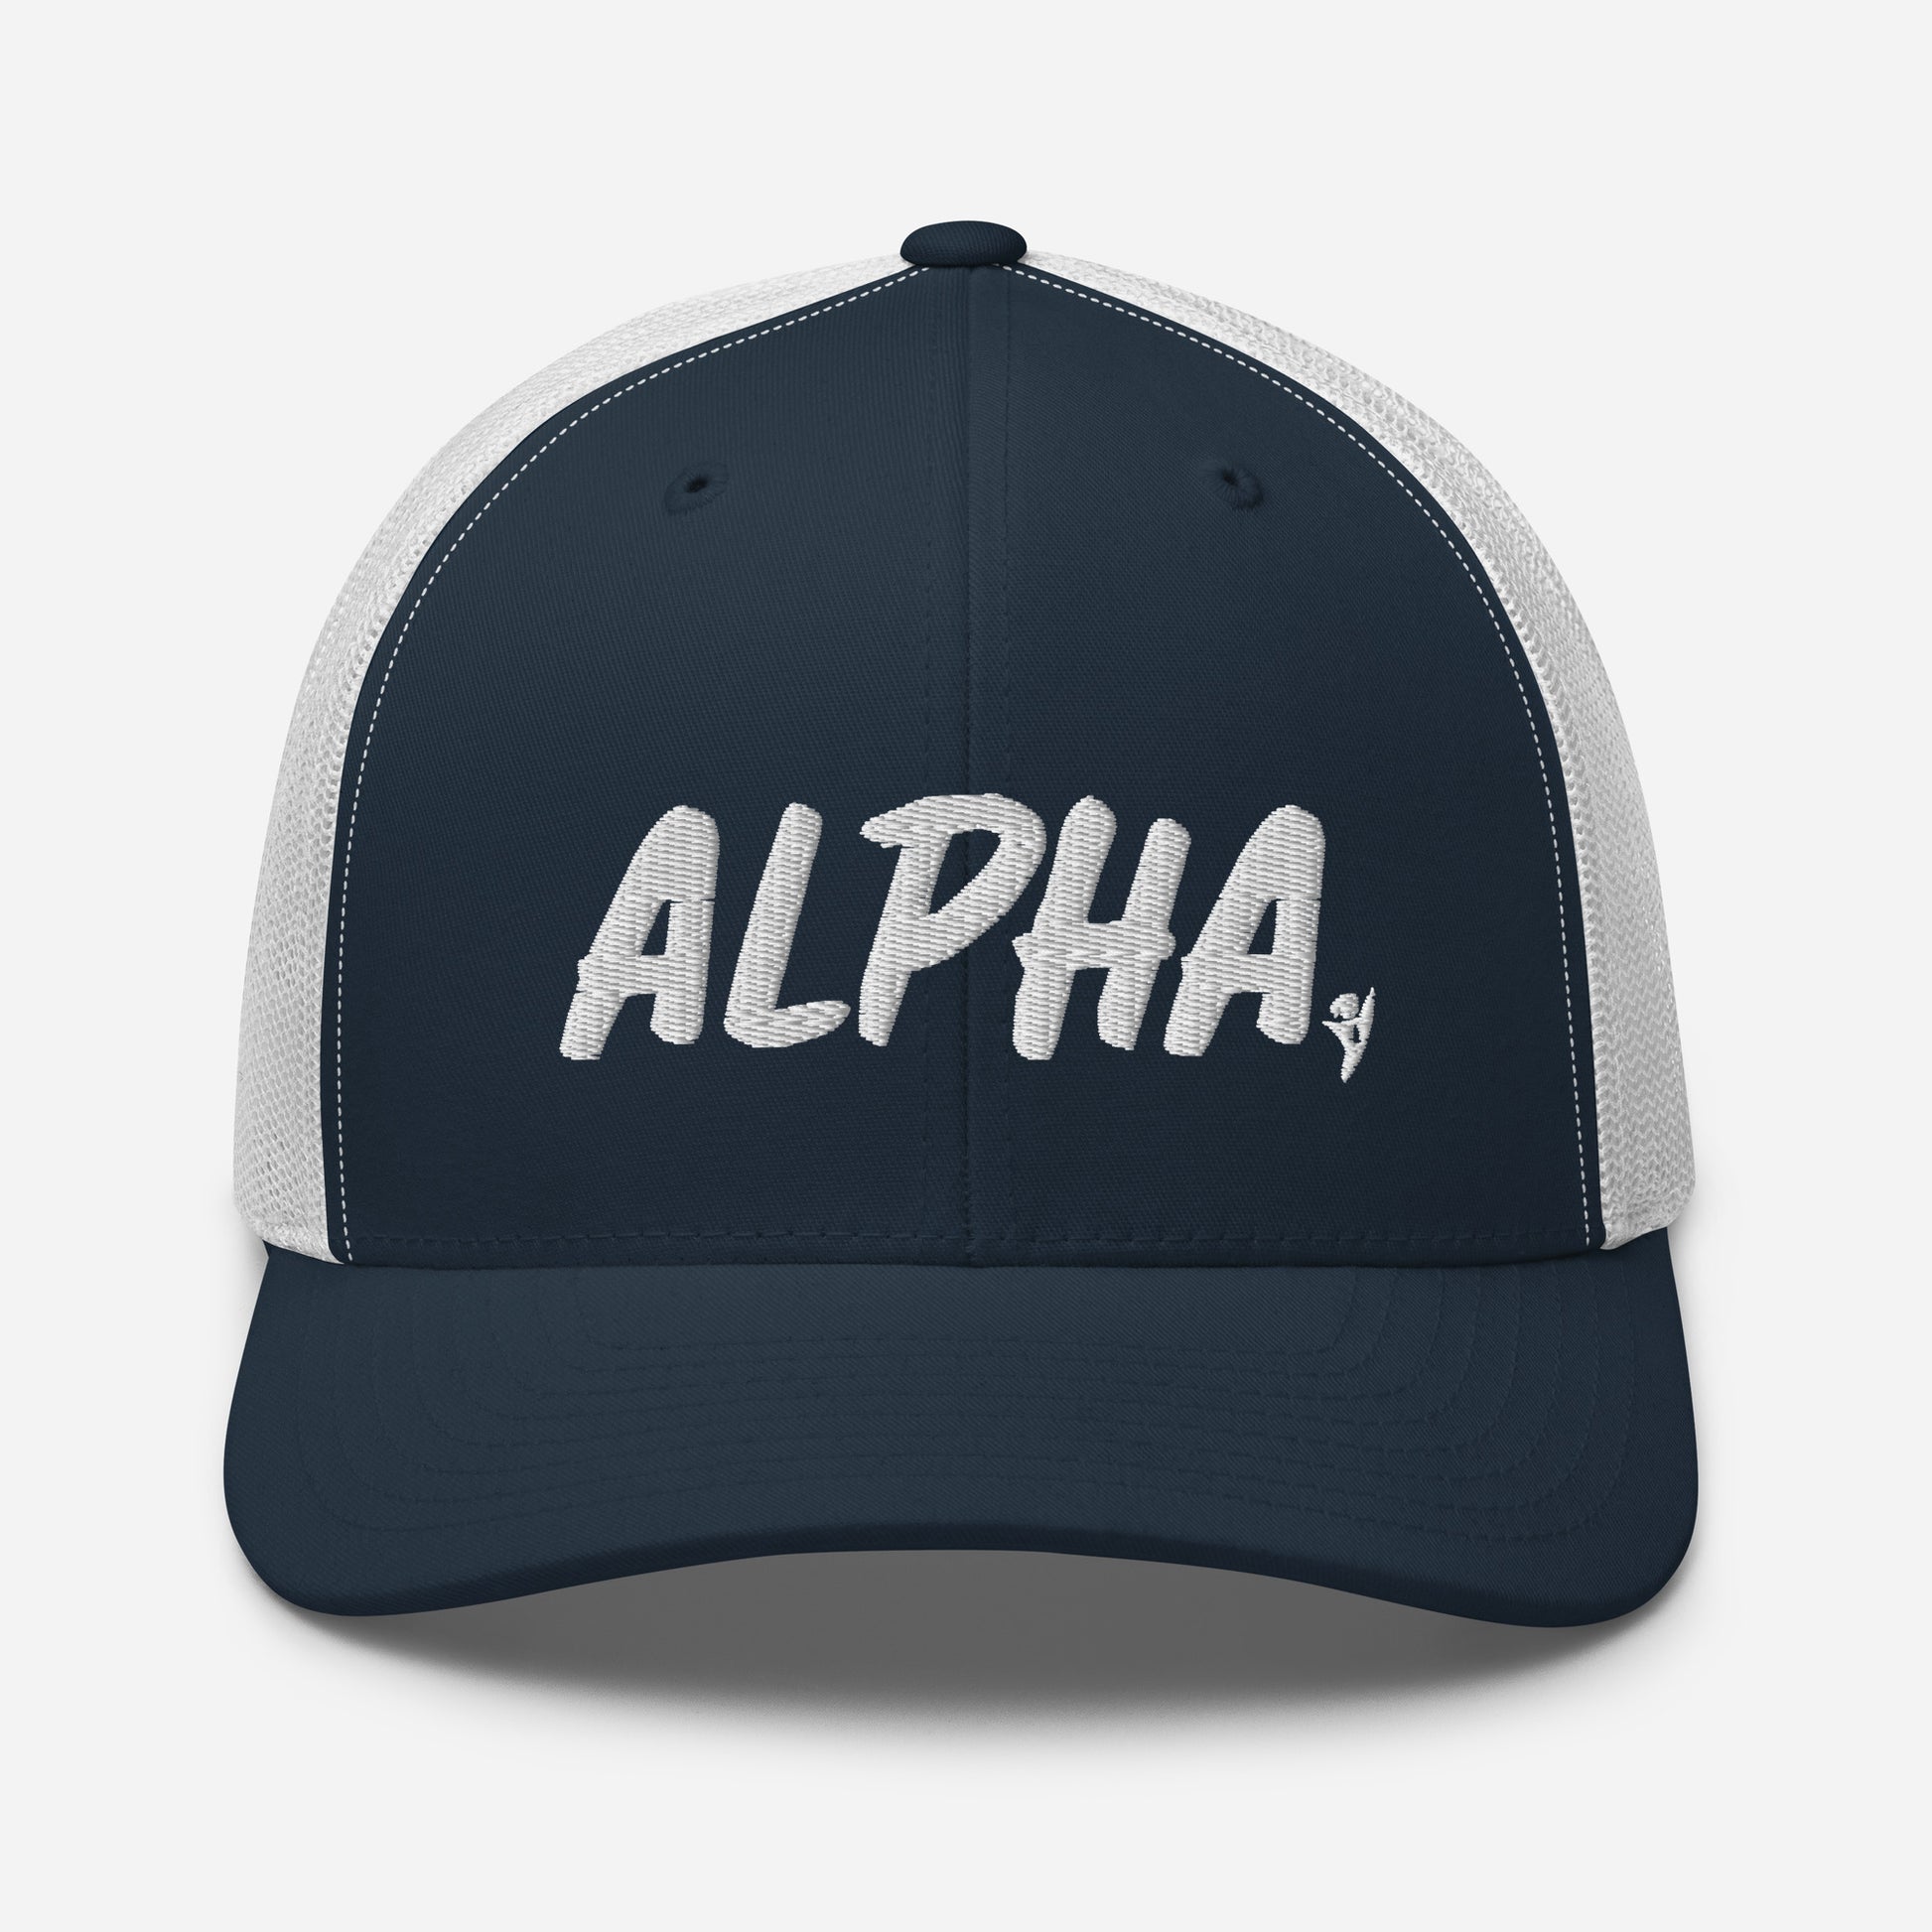 Money ALPHA Gear Hat – Gas